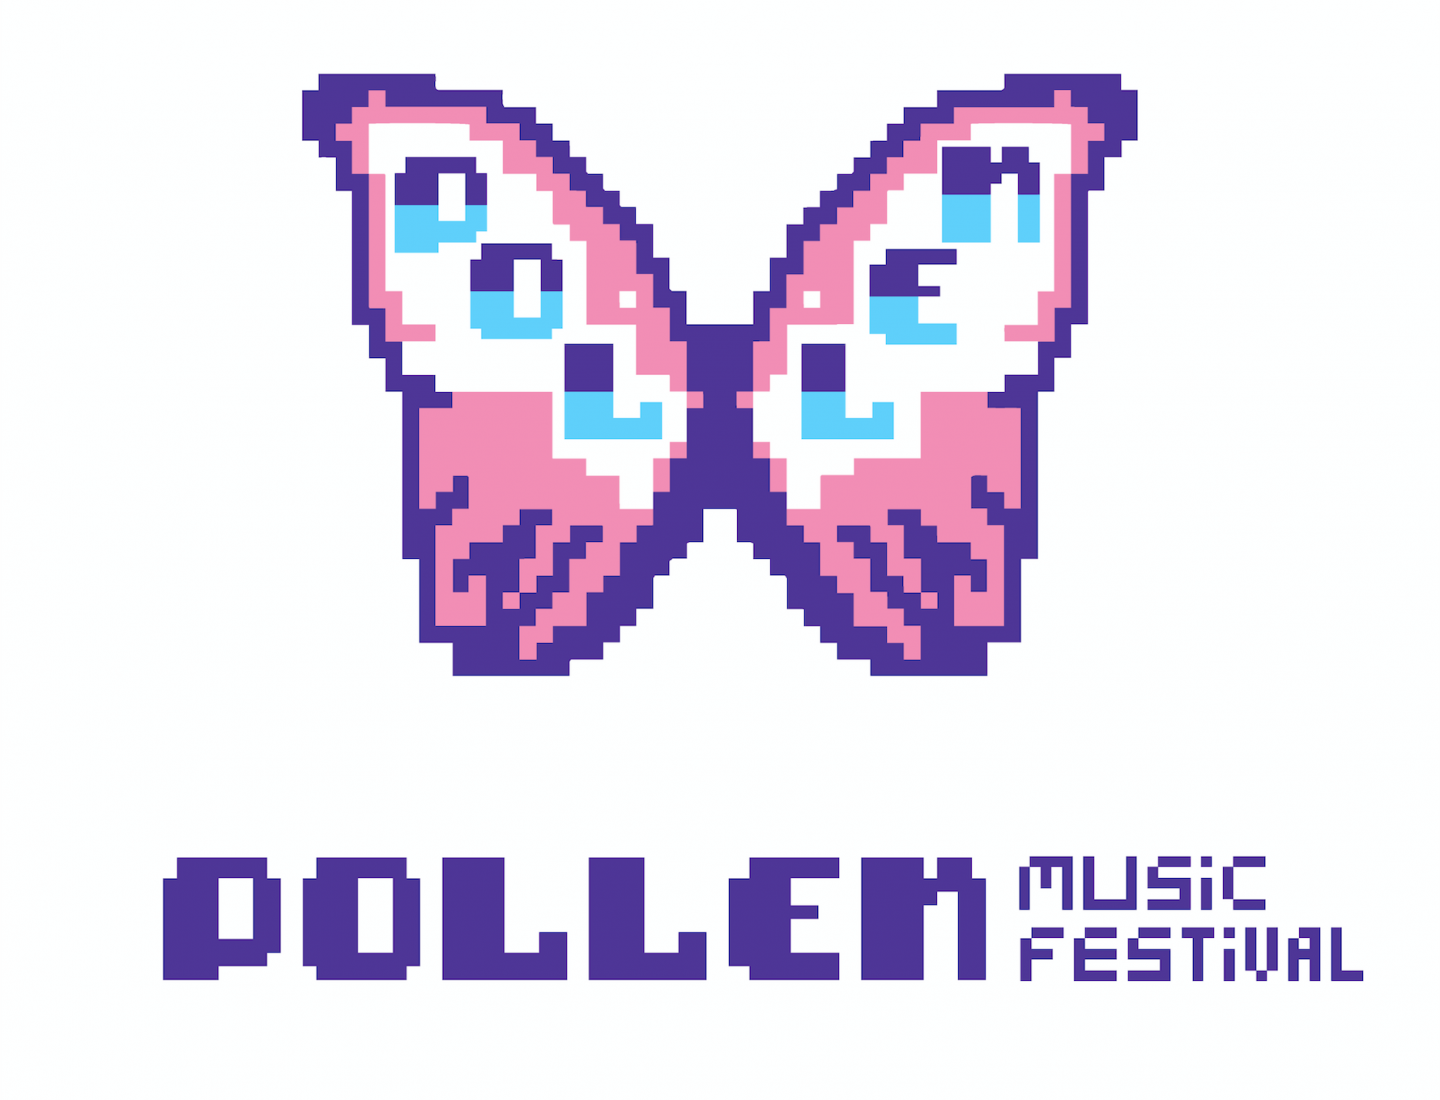 Pollen Music Festival